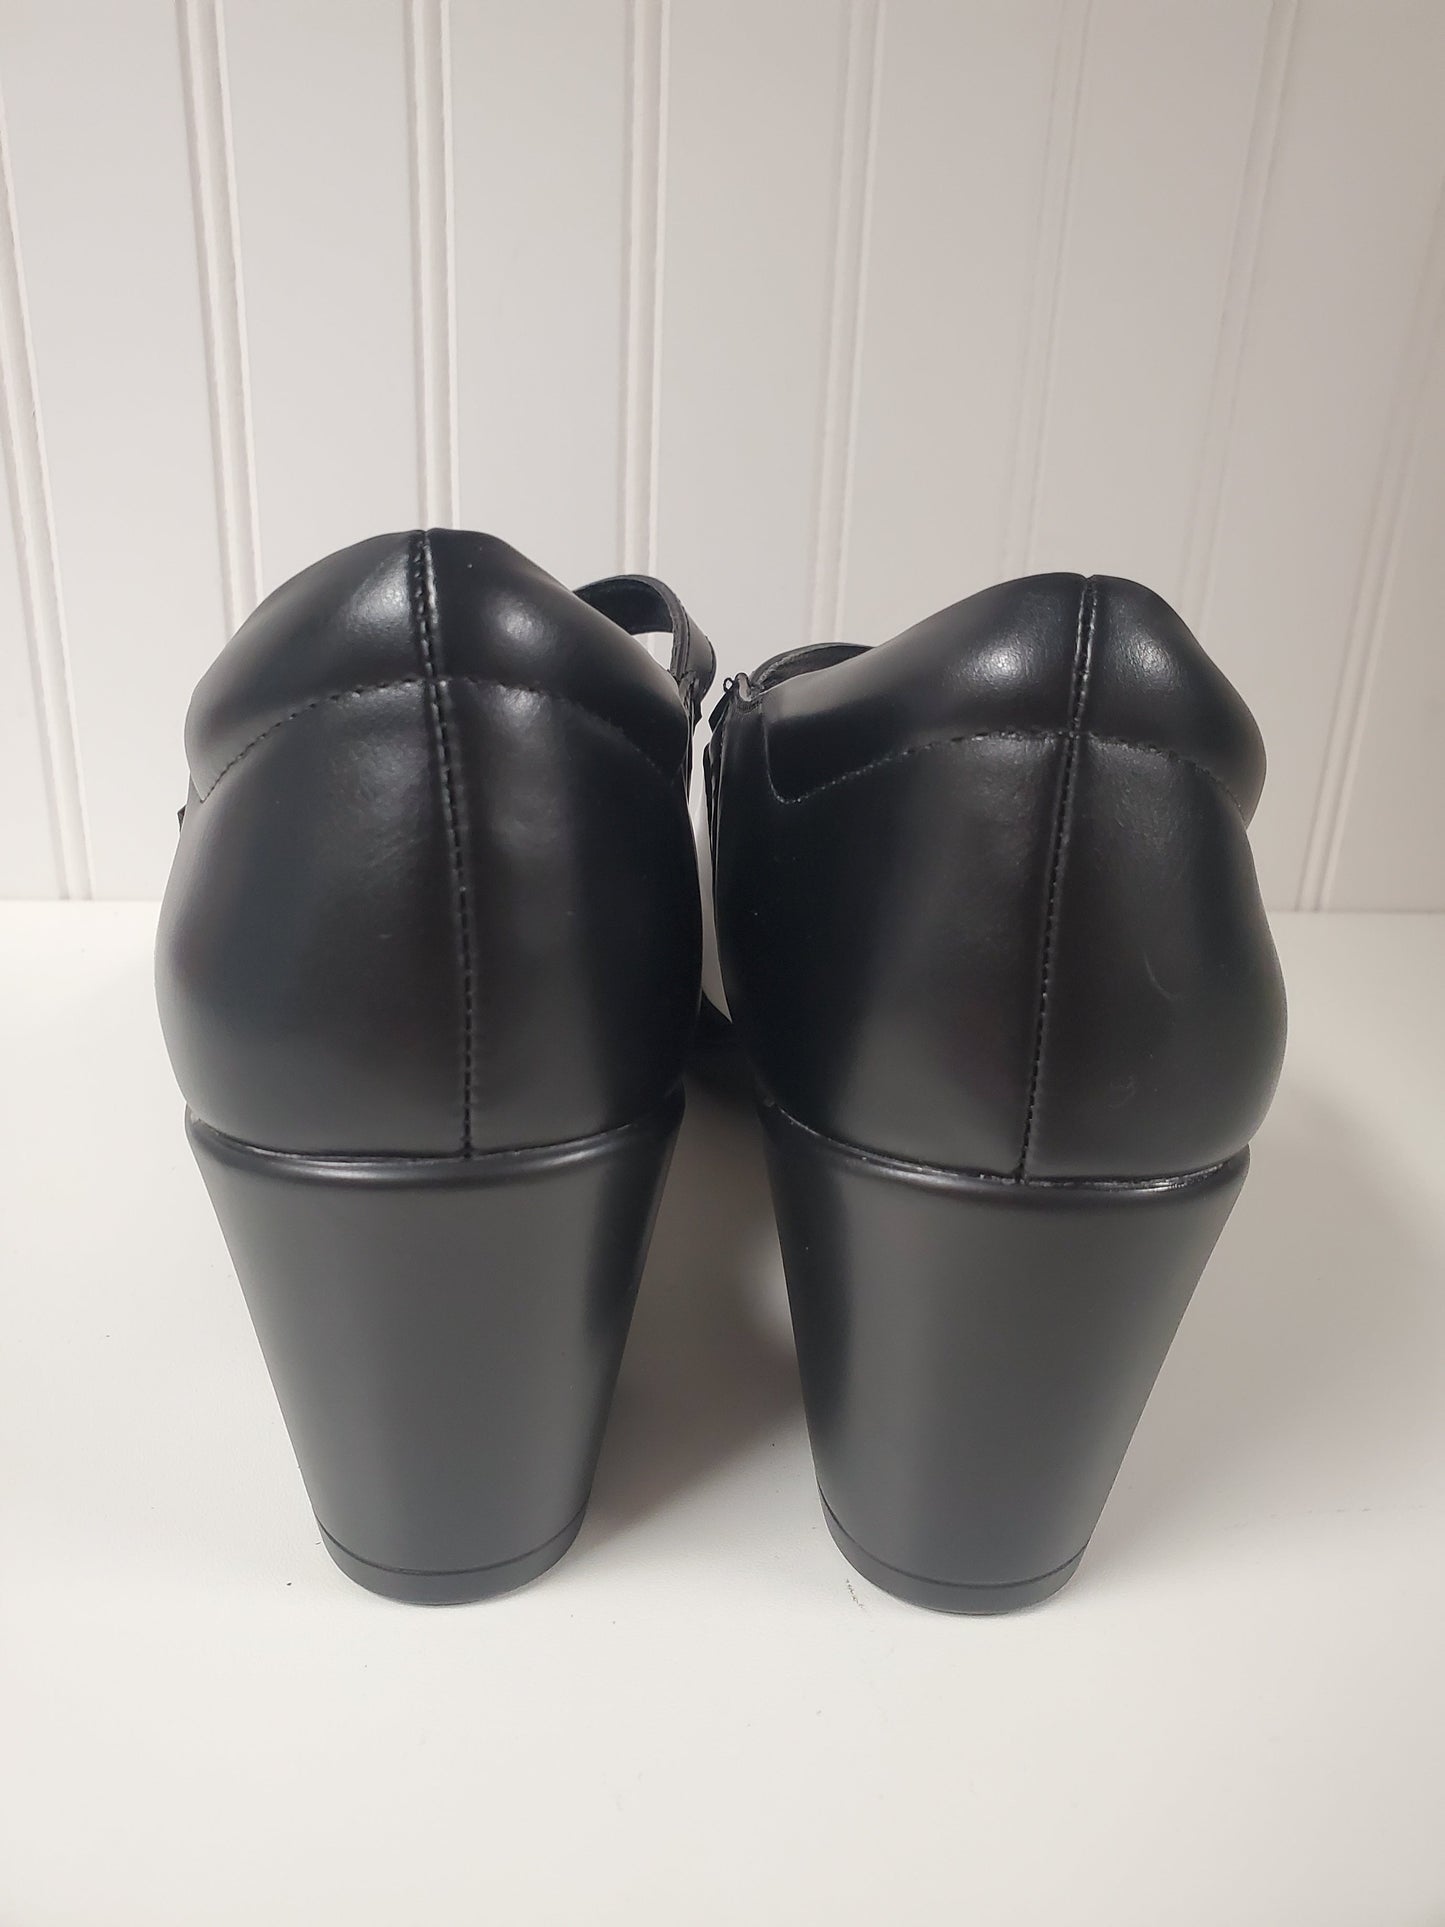 Black & White Shoes Heels Block Cmb, Size 9.5